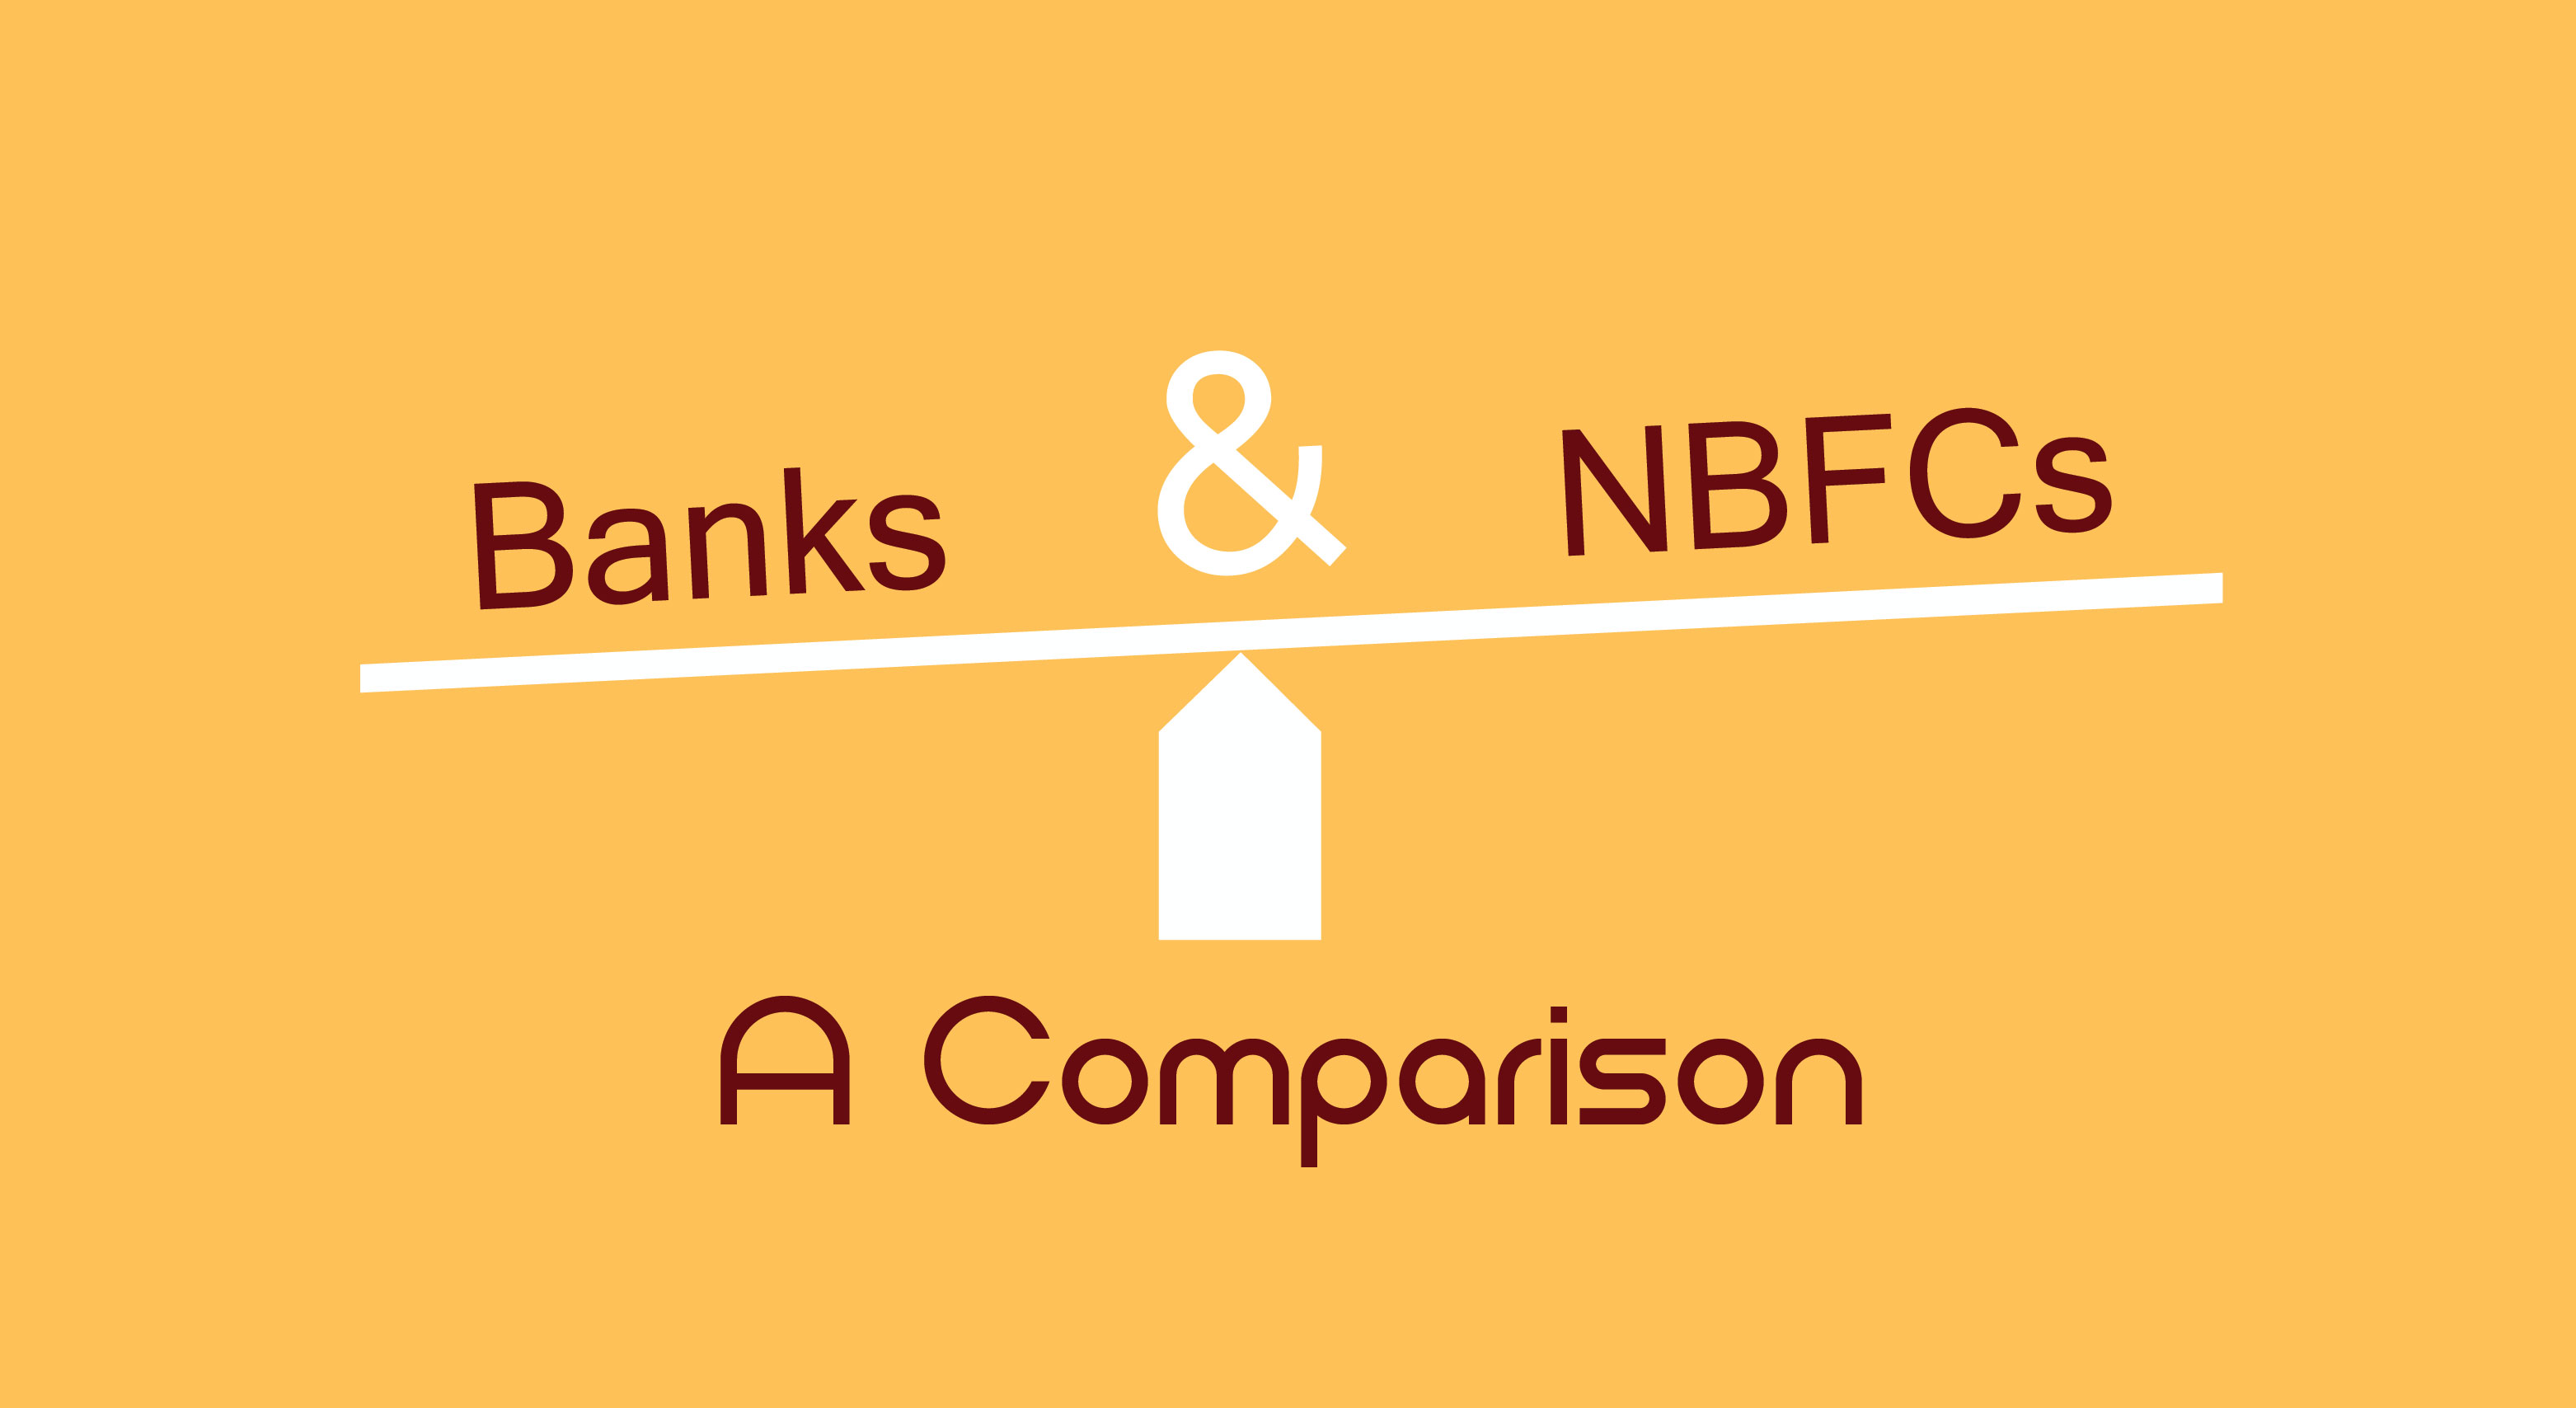 NBFC business loan